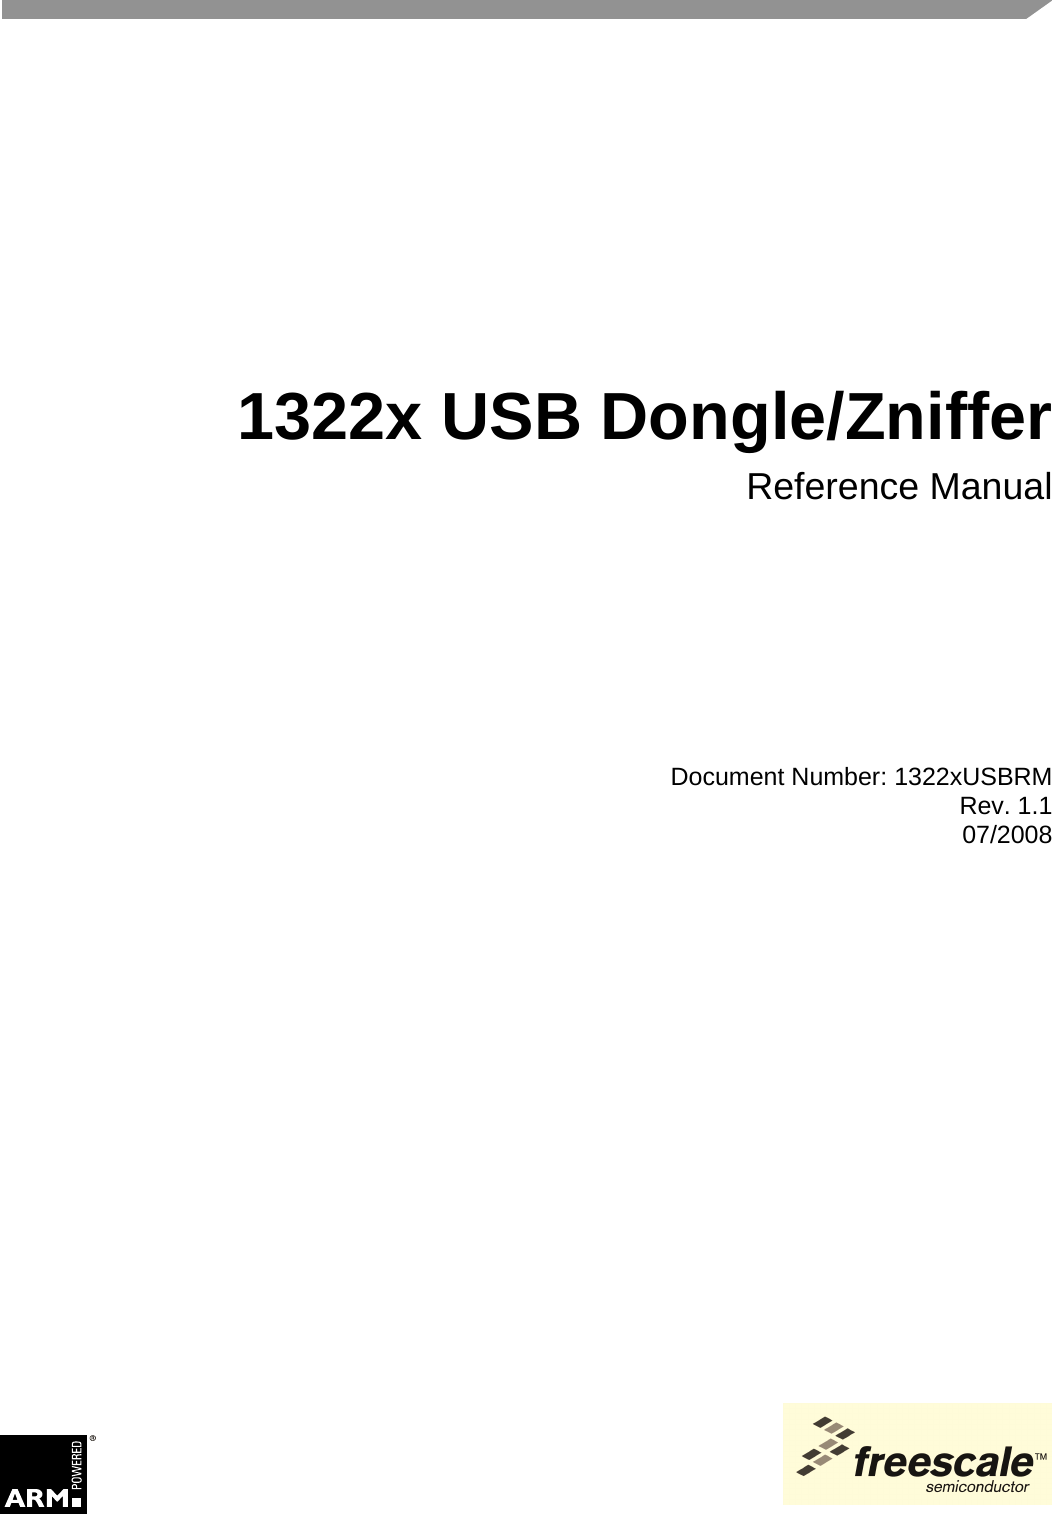 Document Number: 1322xUSBRMRev. 1.107/2008 1322x USB Dongle/ZnifferReference Manual